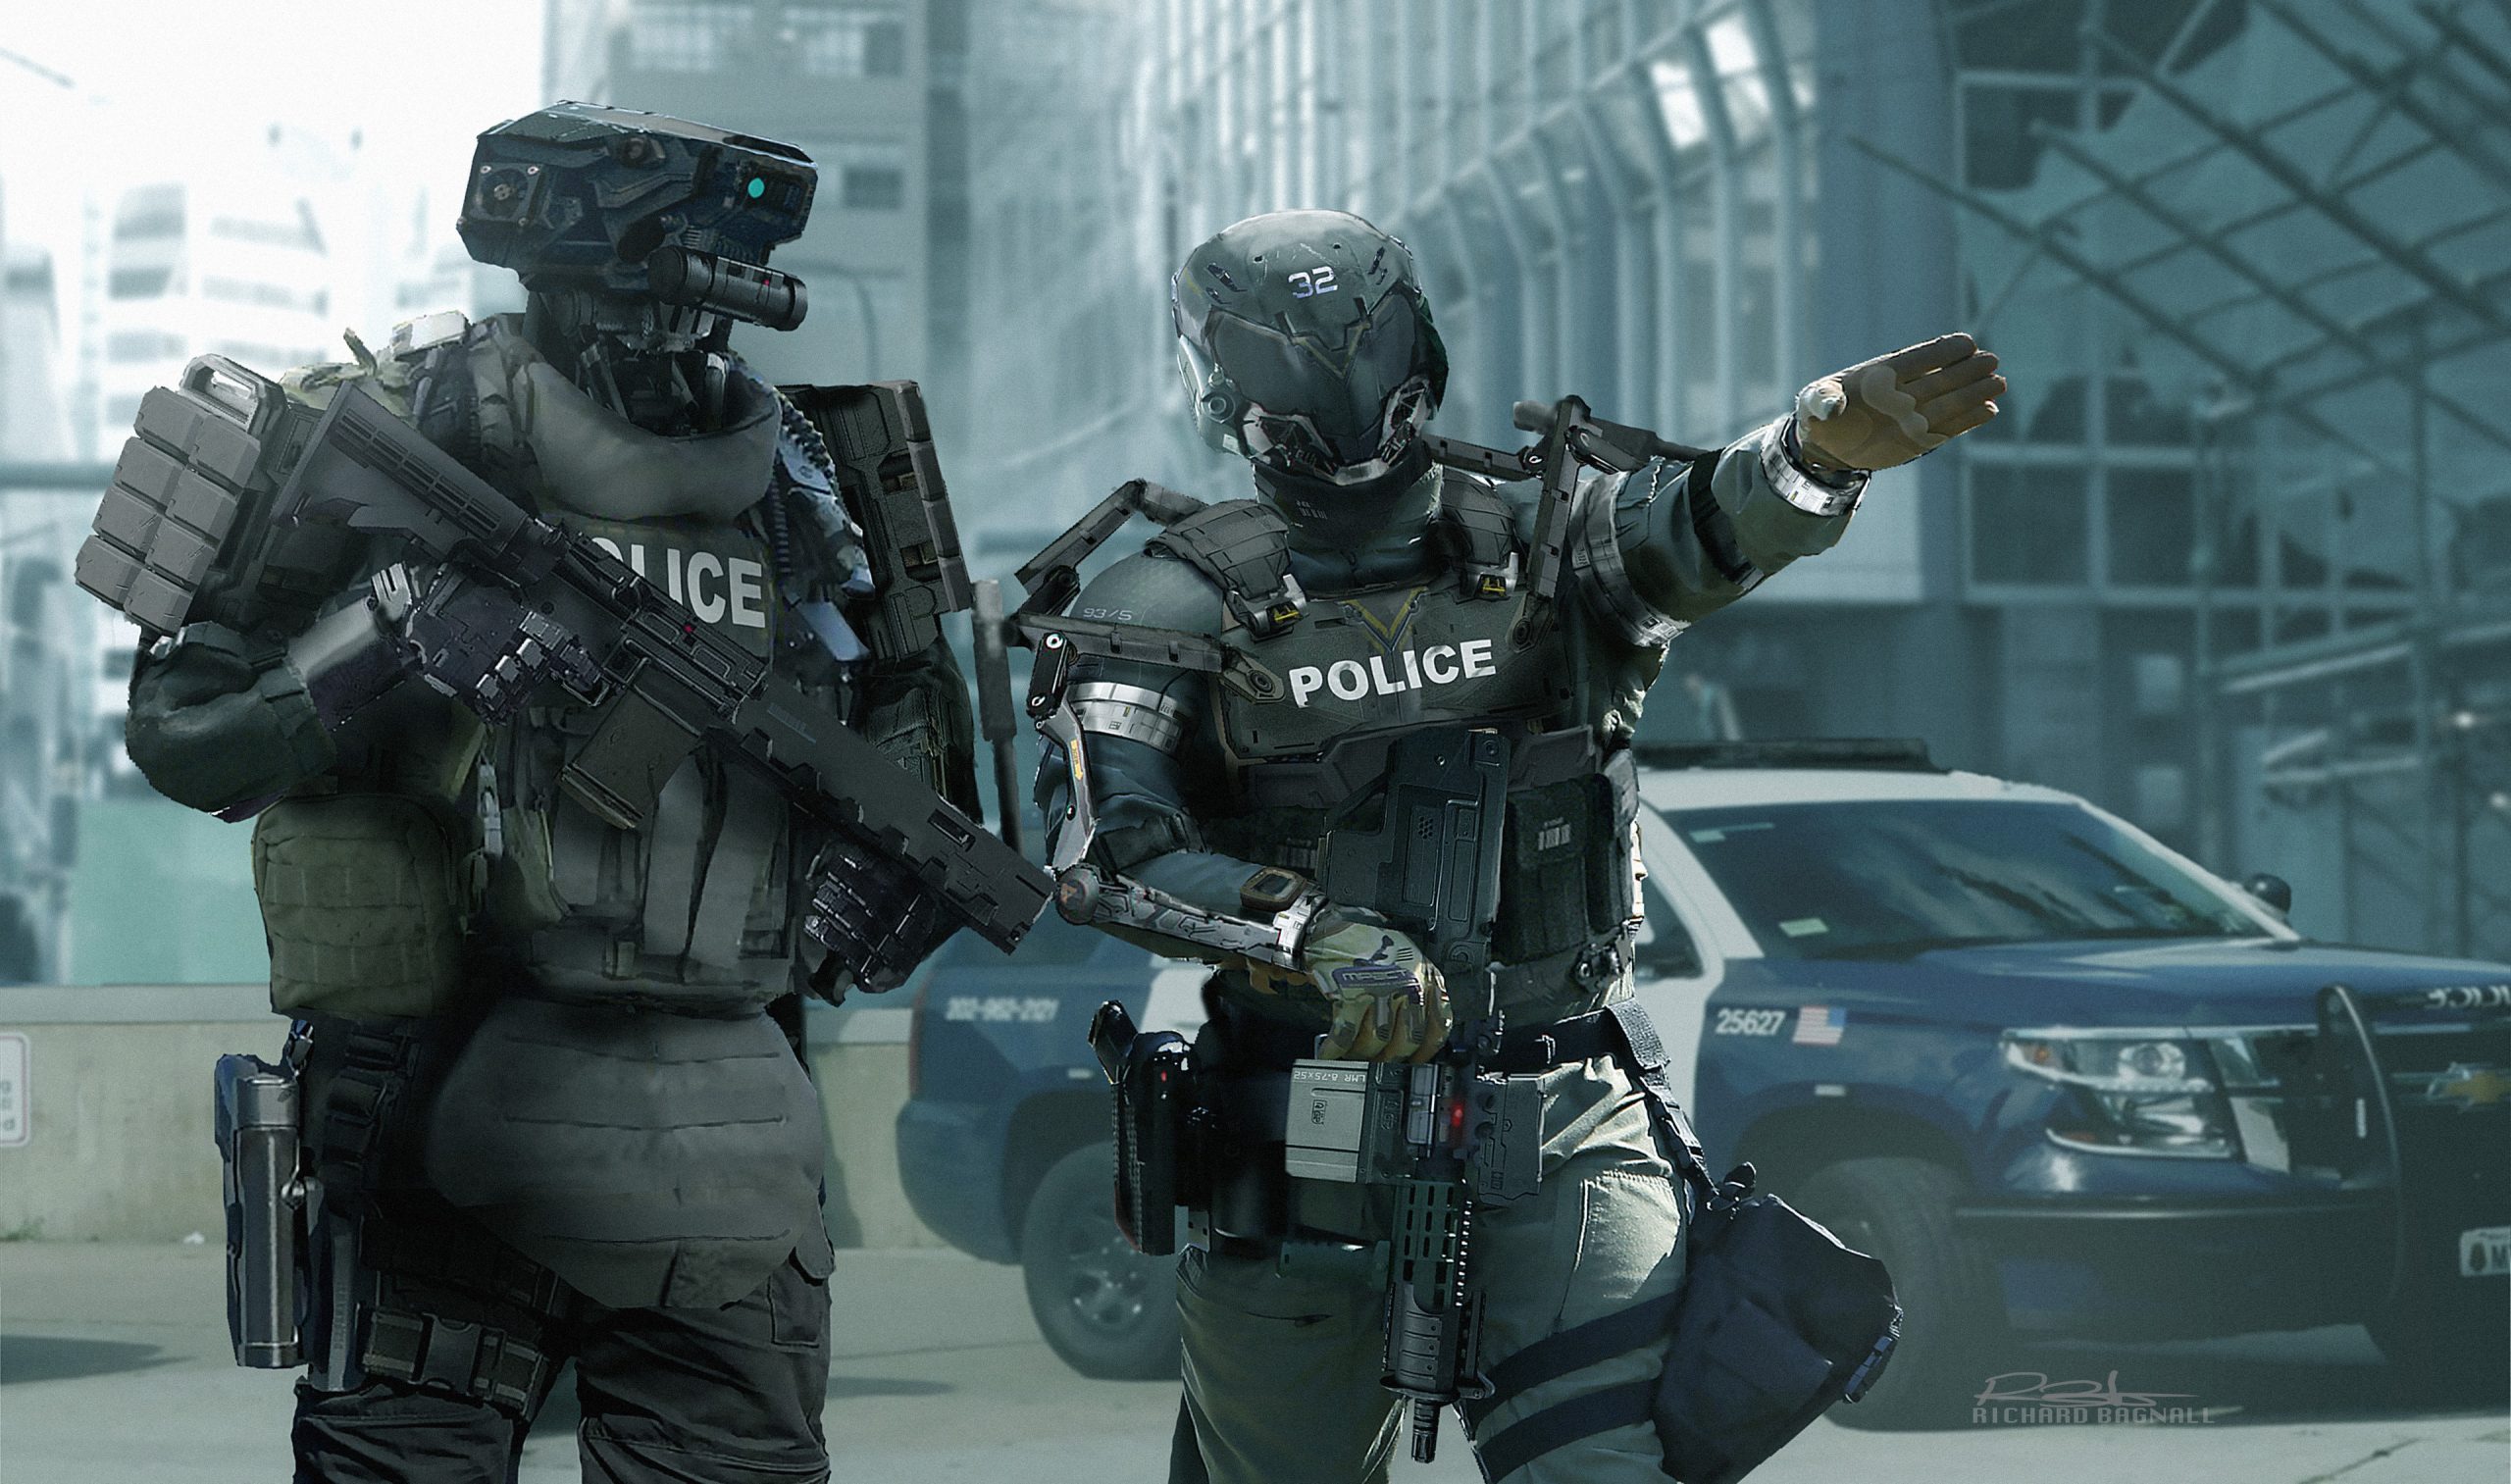 Sci-fi cyberpunk tactical police enforcement concept by Richard Bagnall